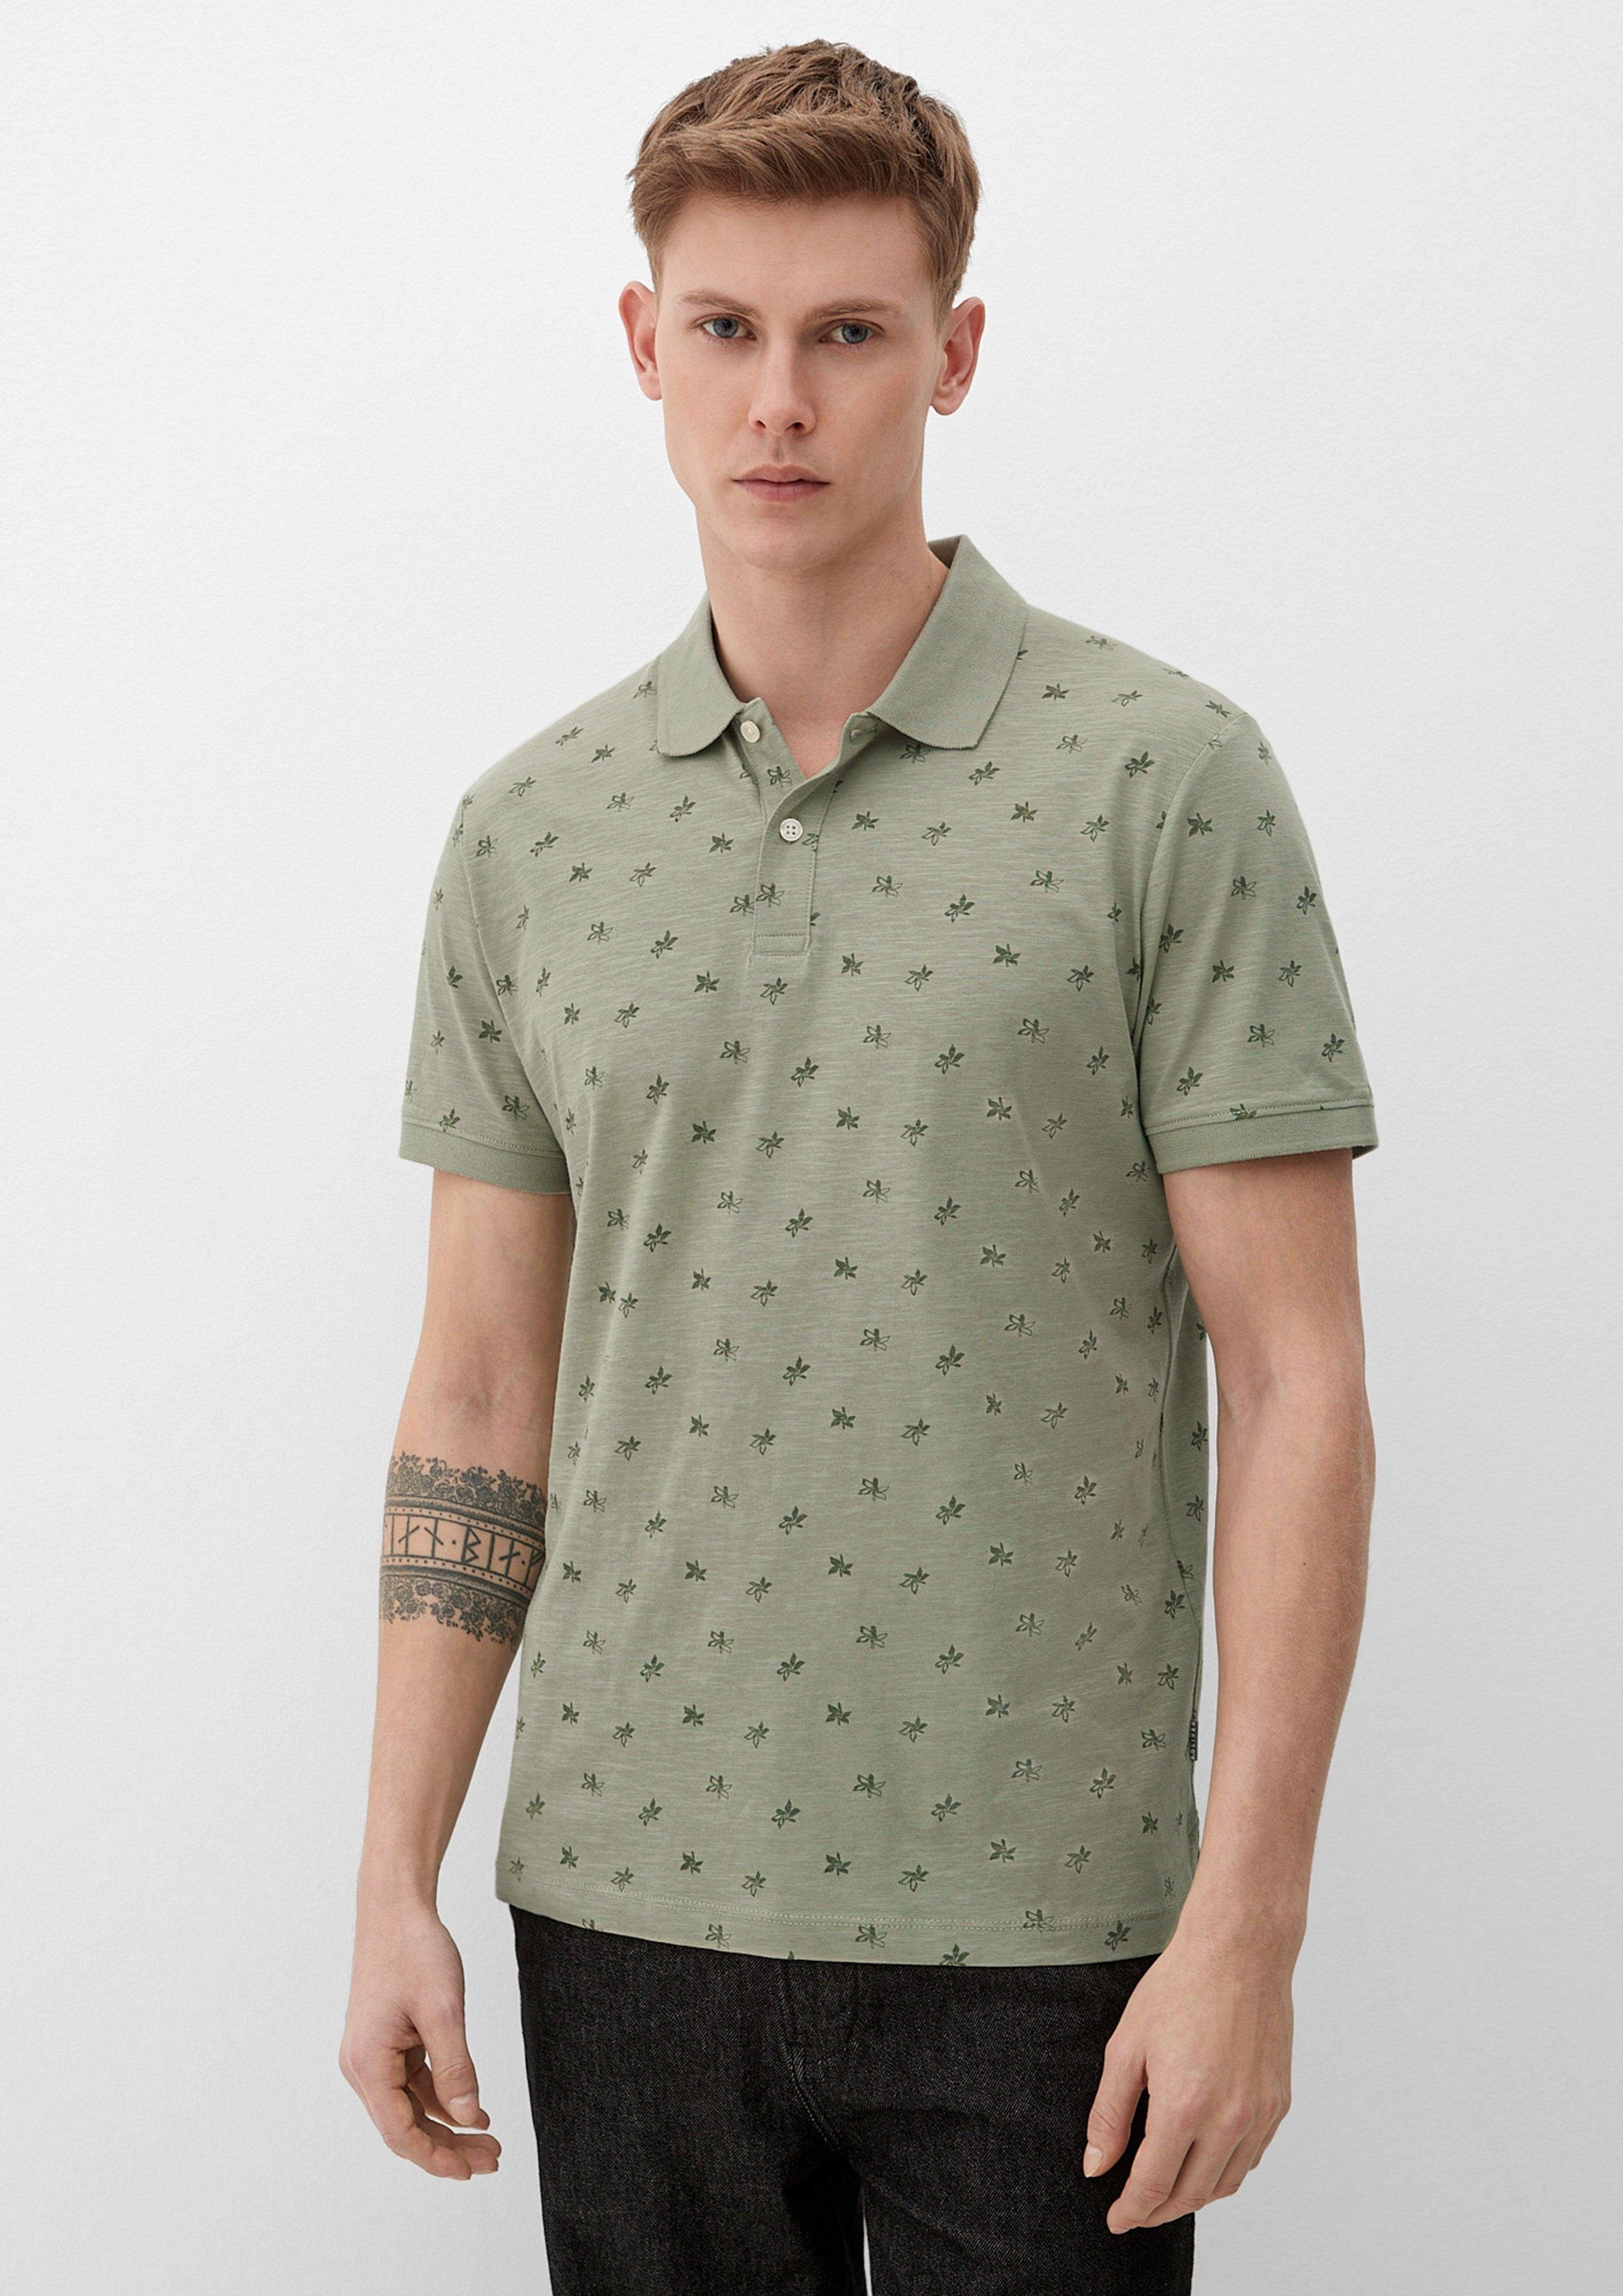 Poloshirt s.Oliver Allover-Print olivgrün Poloshirt mit